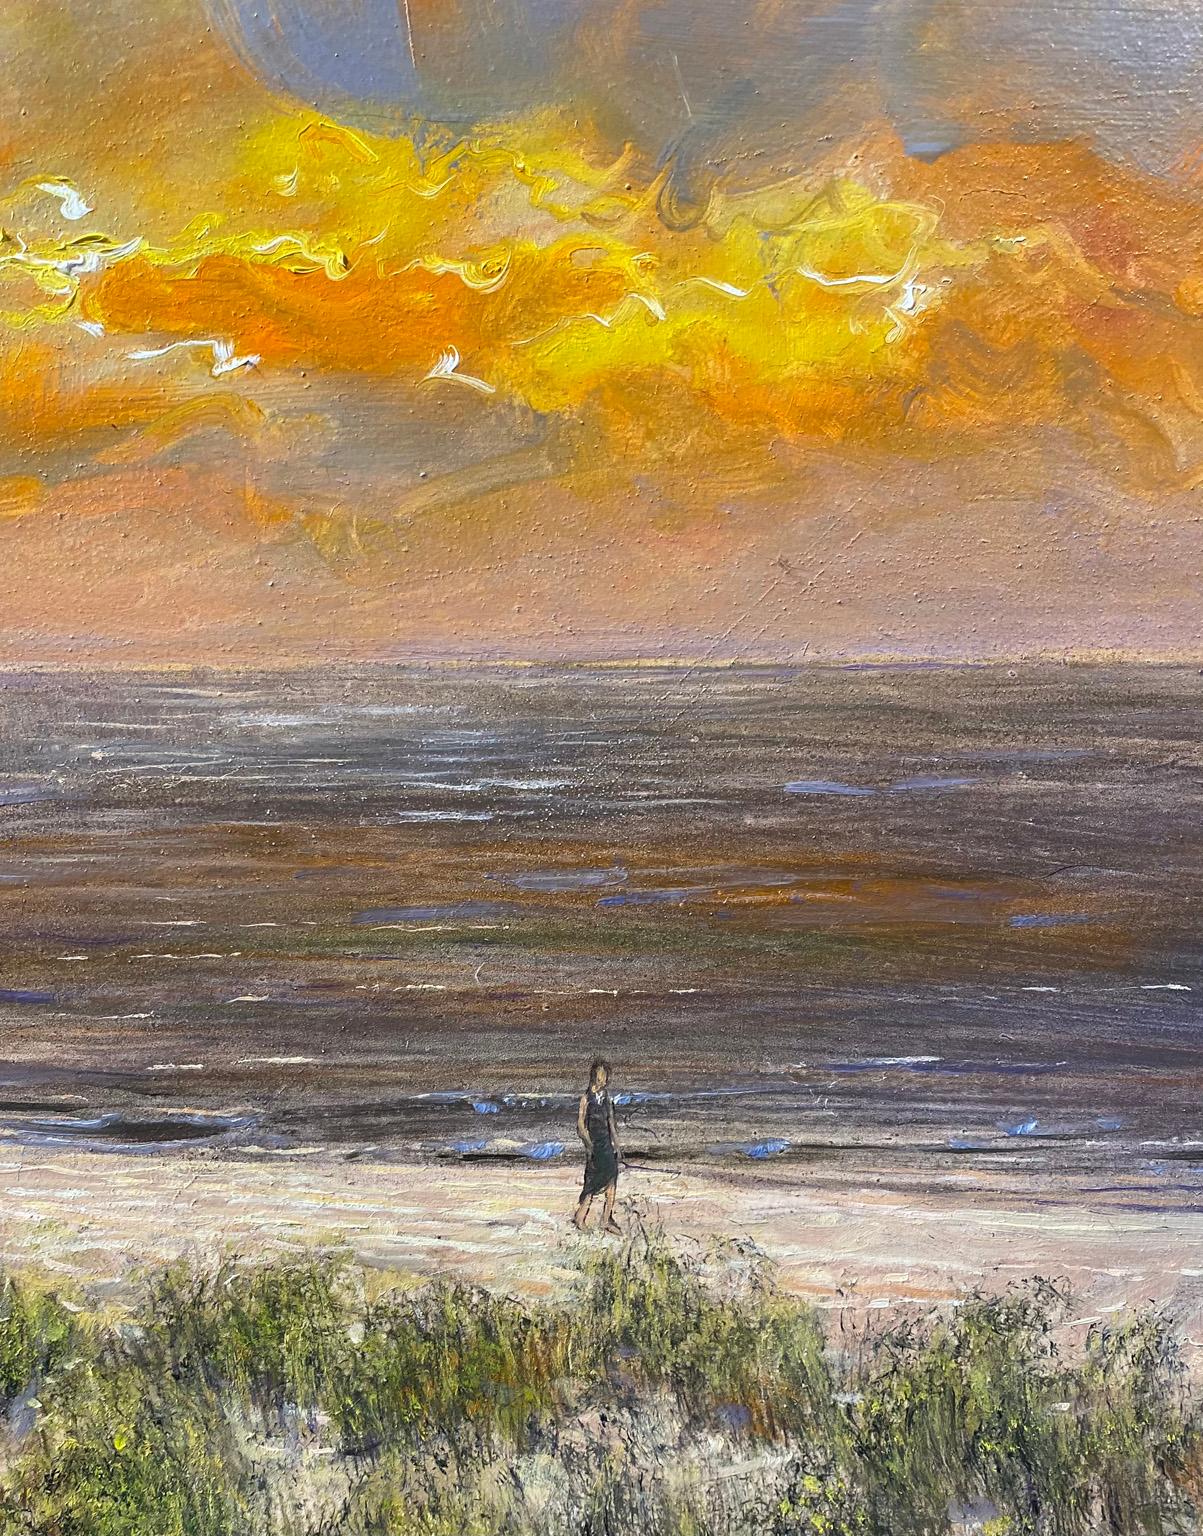  Nantucket Beach - Painting by Nicholas Oberling